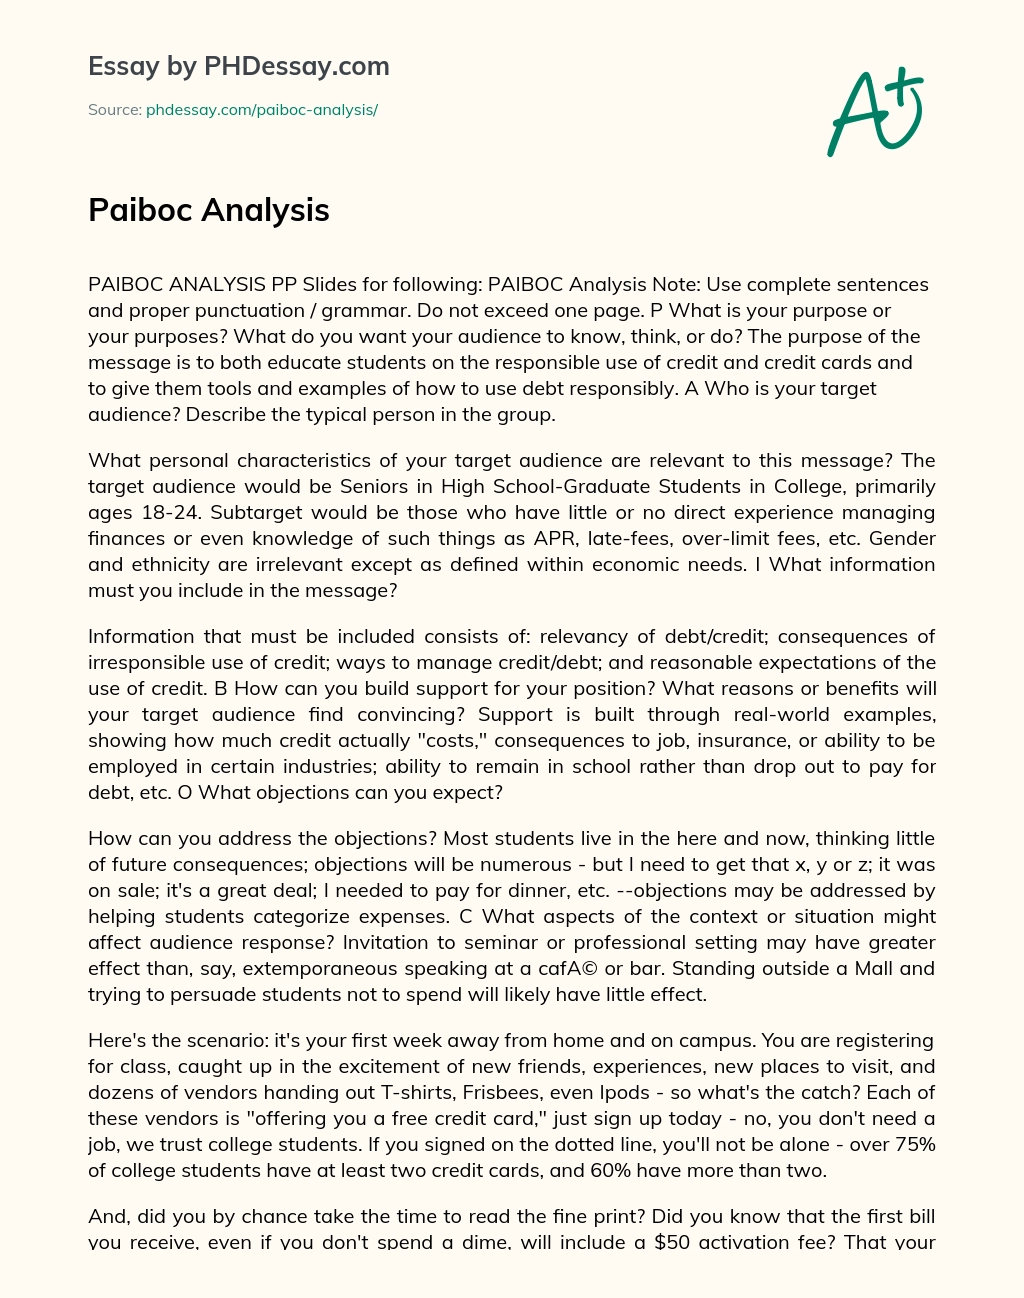 Paiboc Analysis Example essay